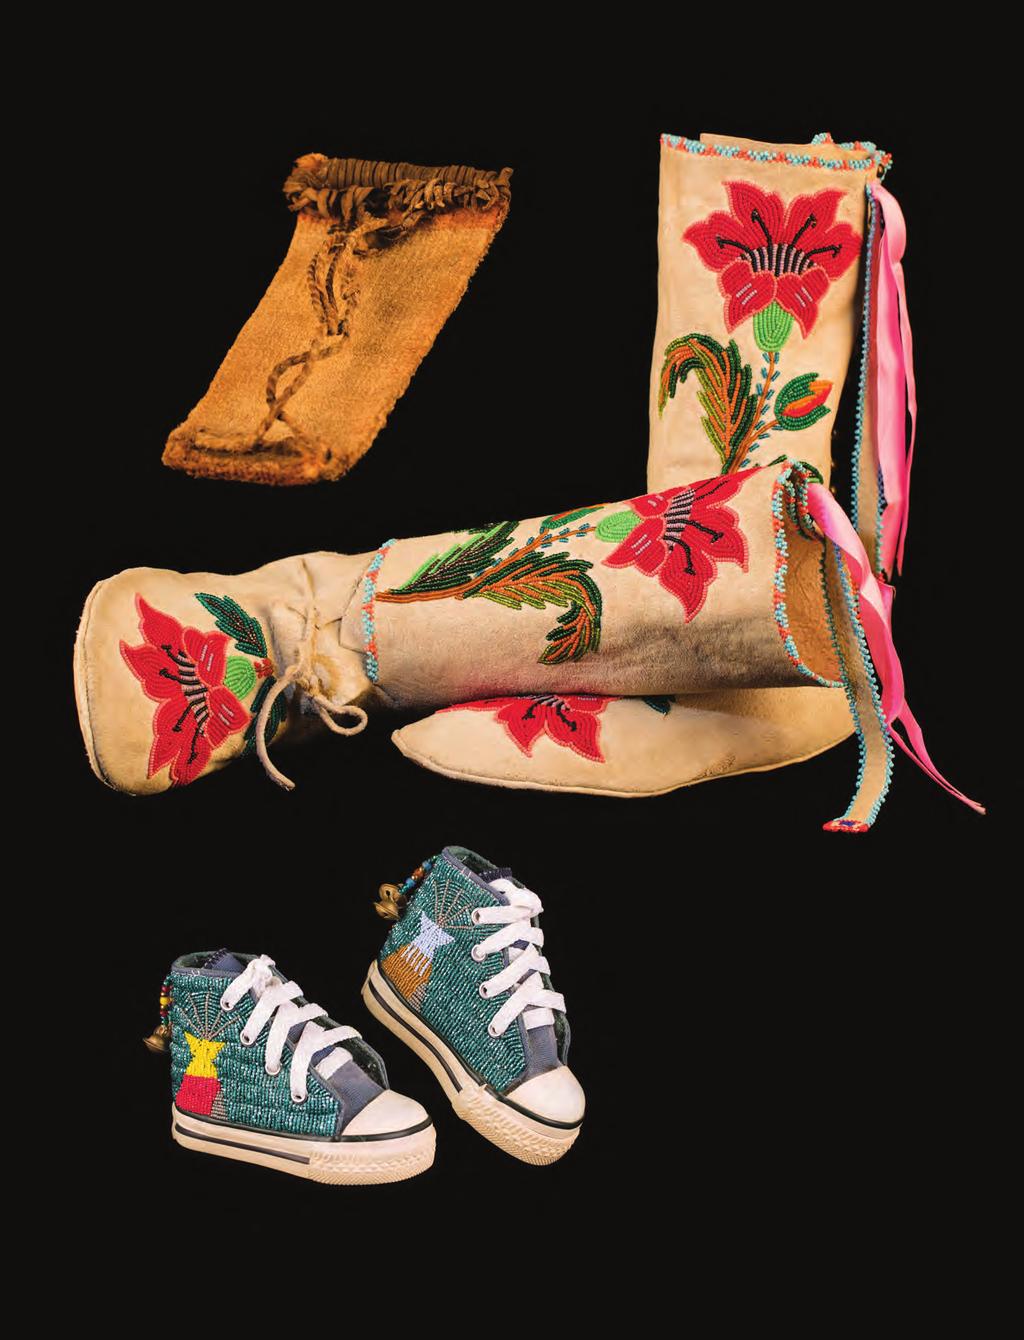 Top: Basketmaker II sandal, AD 200 500, made of yucca and leather. MIAC 53778/11.